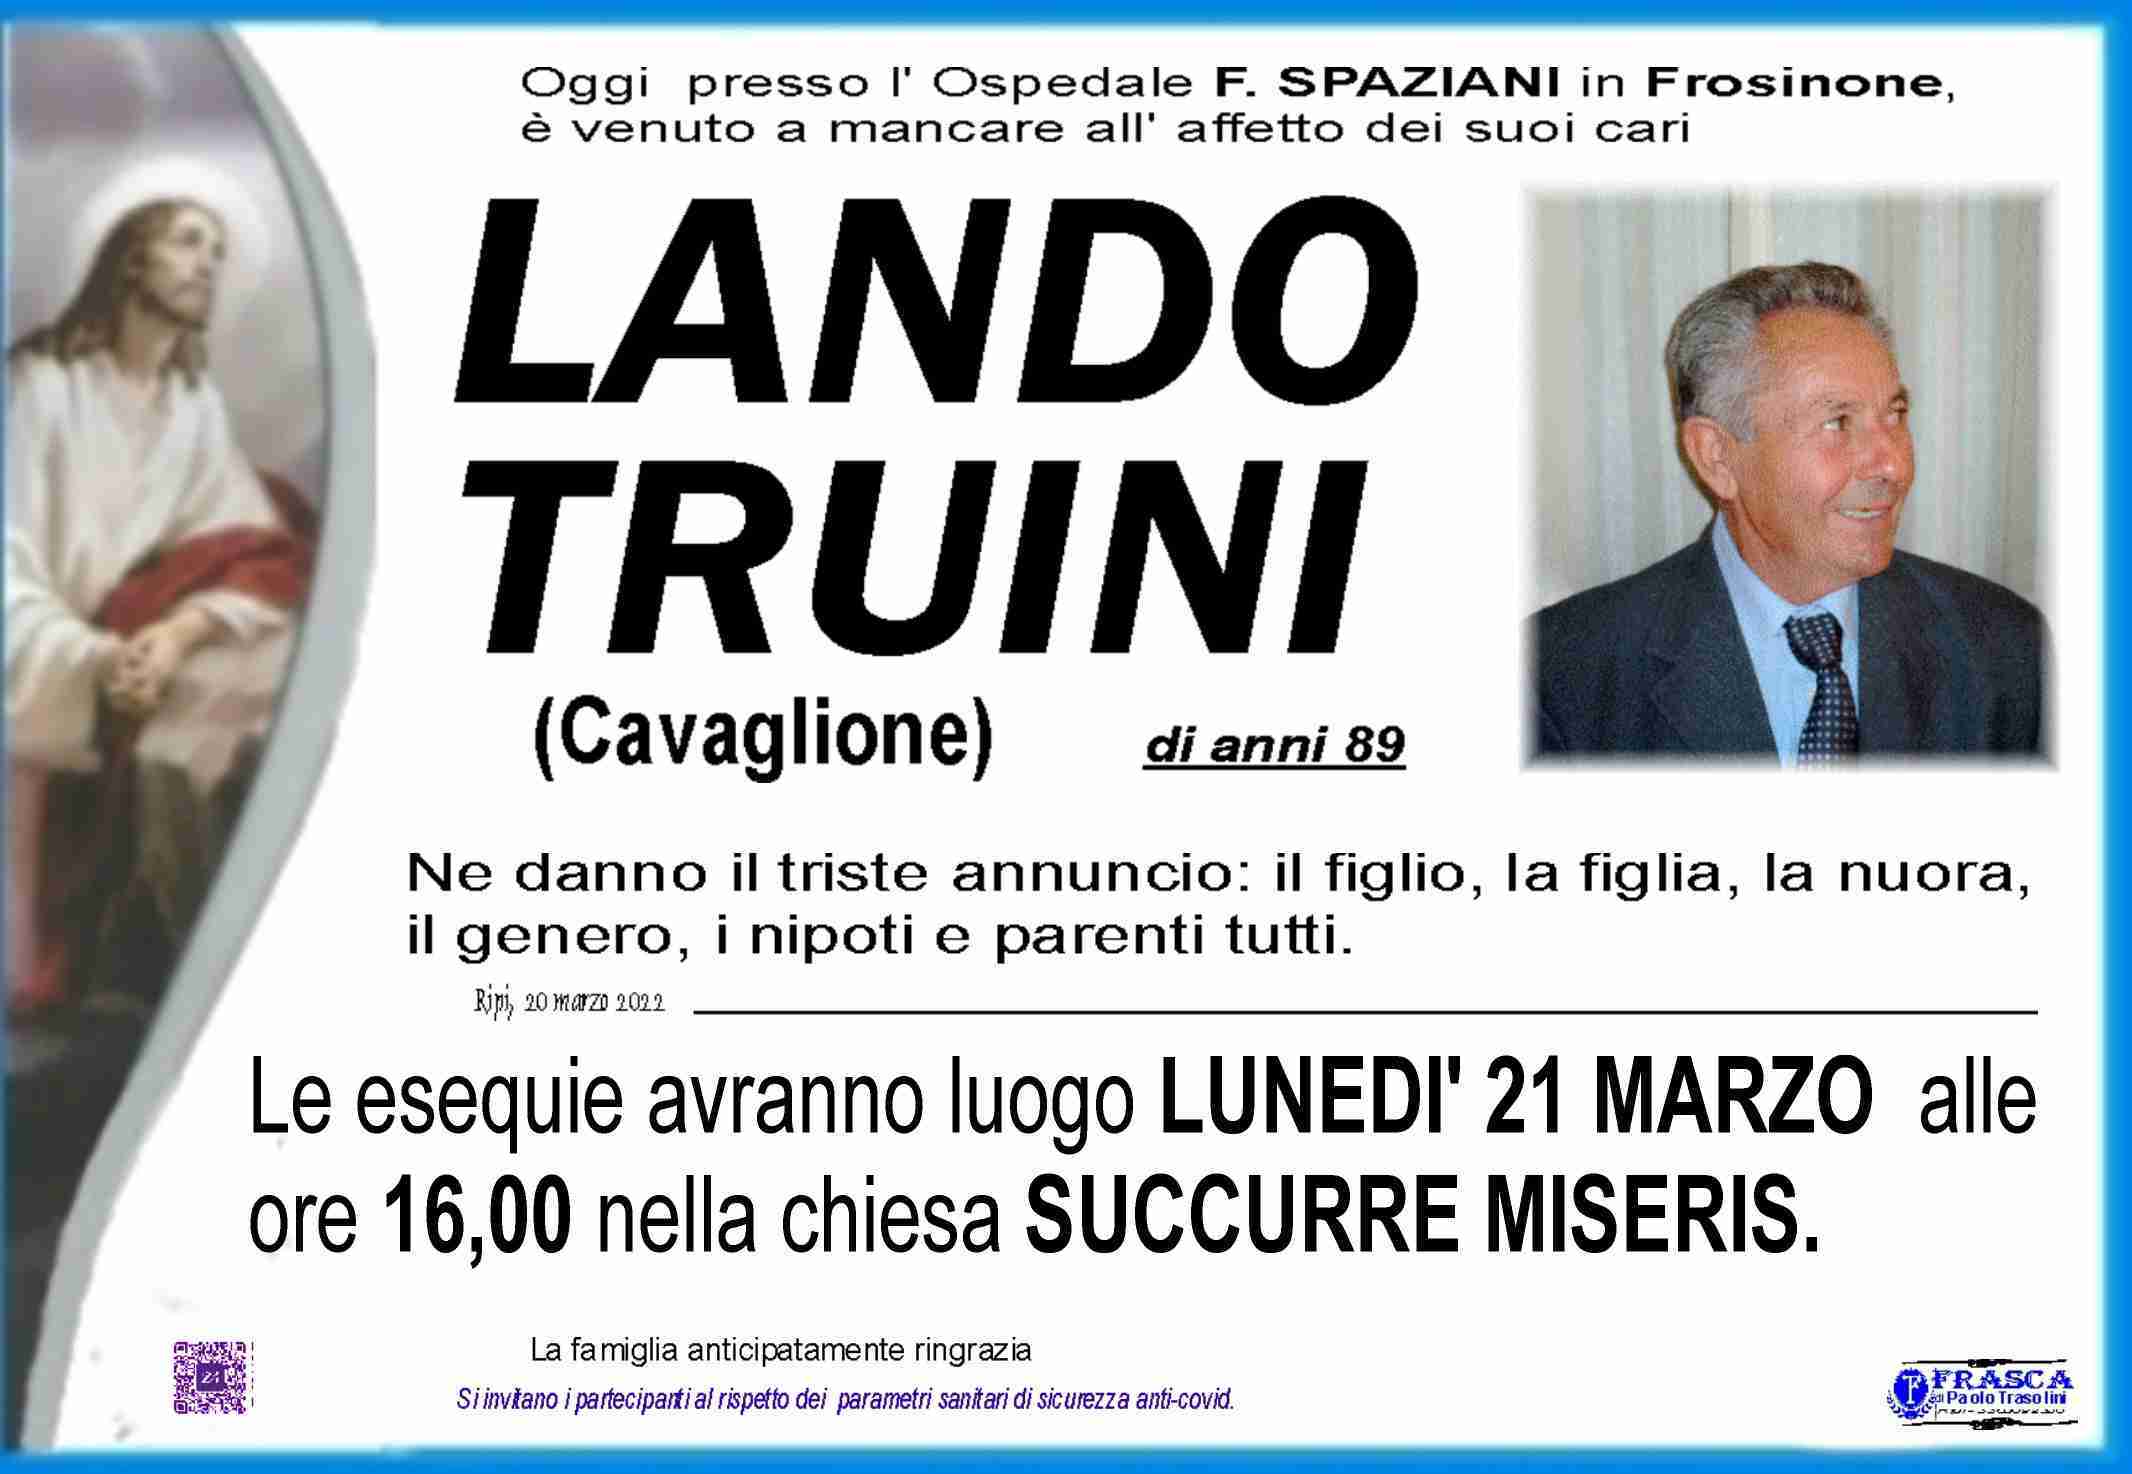 Lando Truini